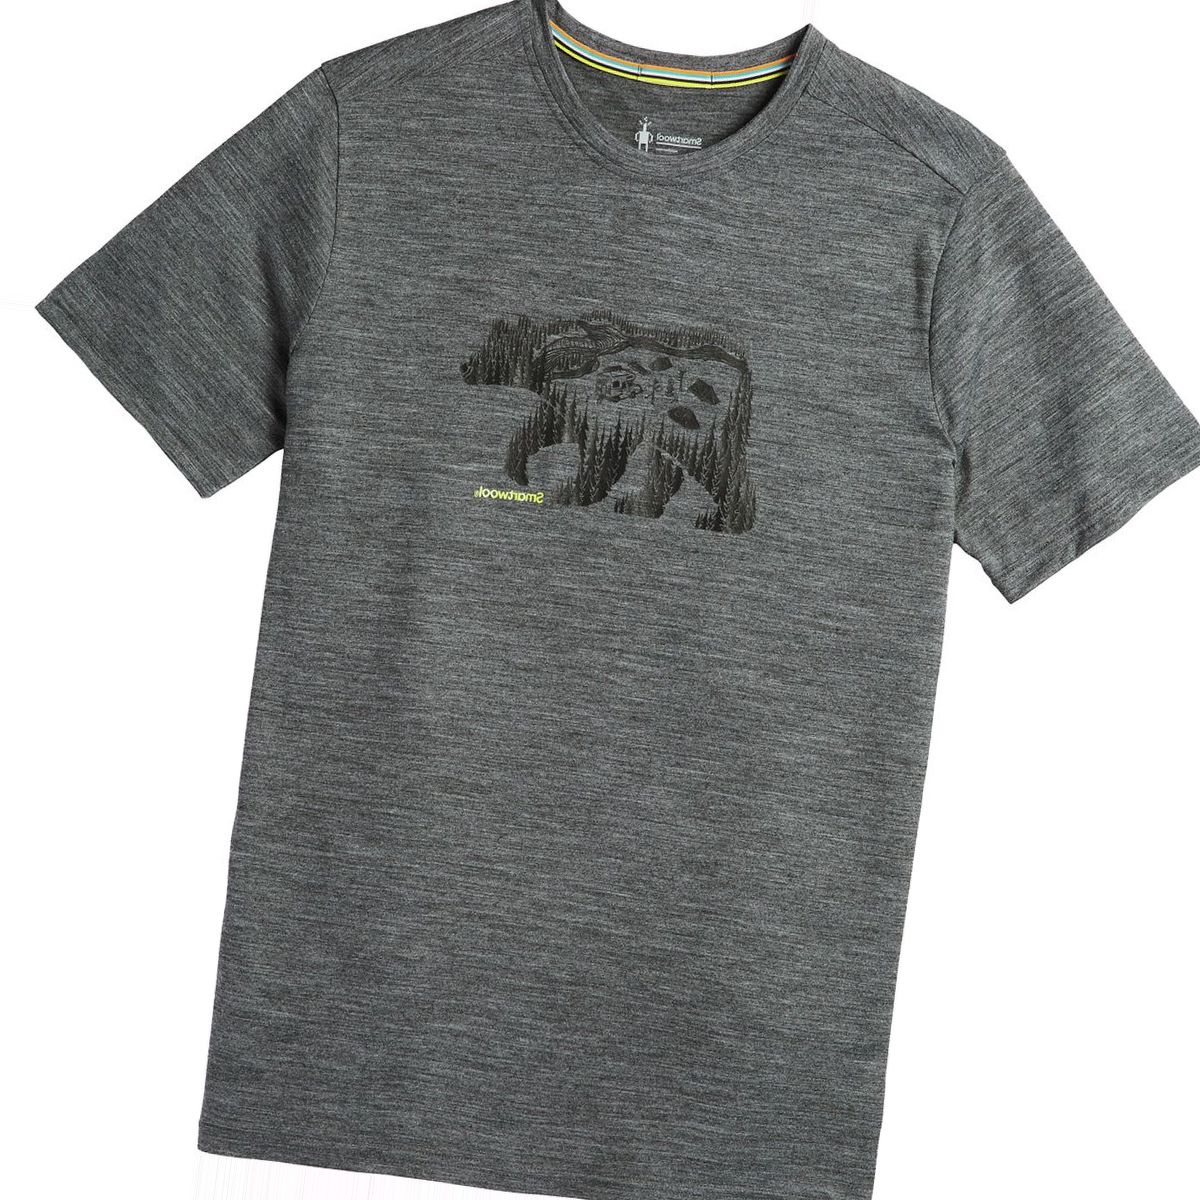 Smartwool Merino Sport 150 Bear Camp T-Shirt - Men's